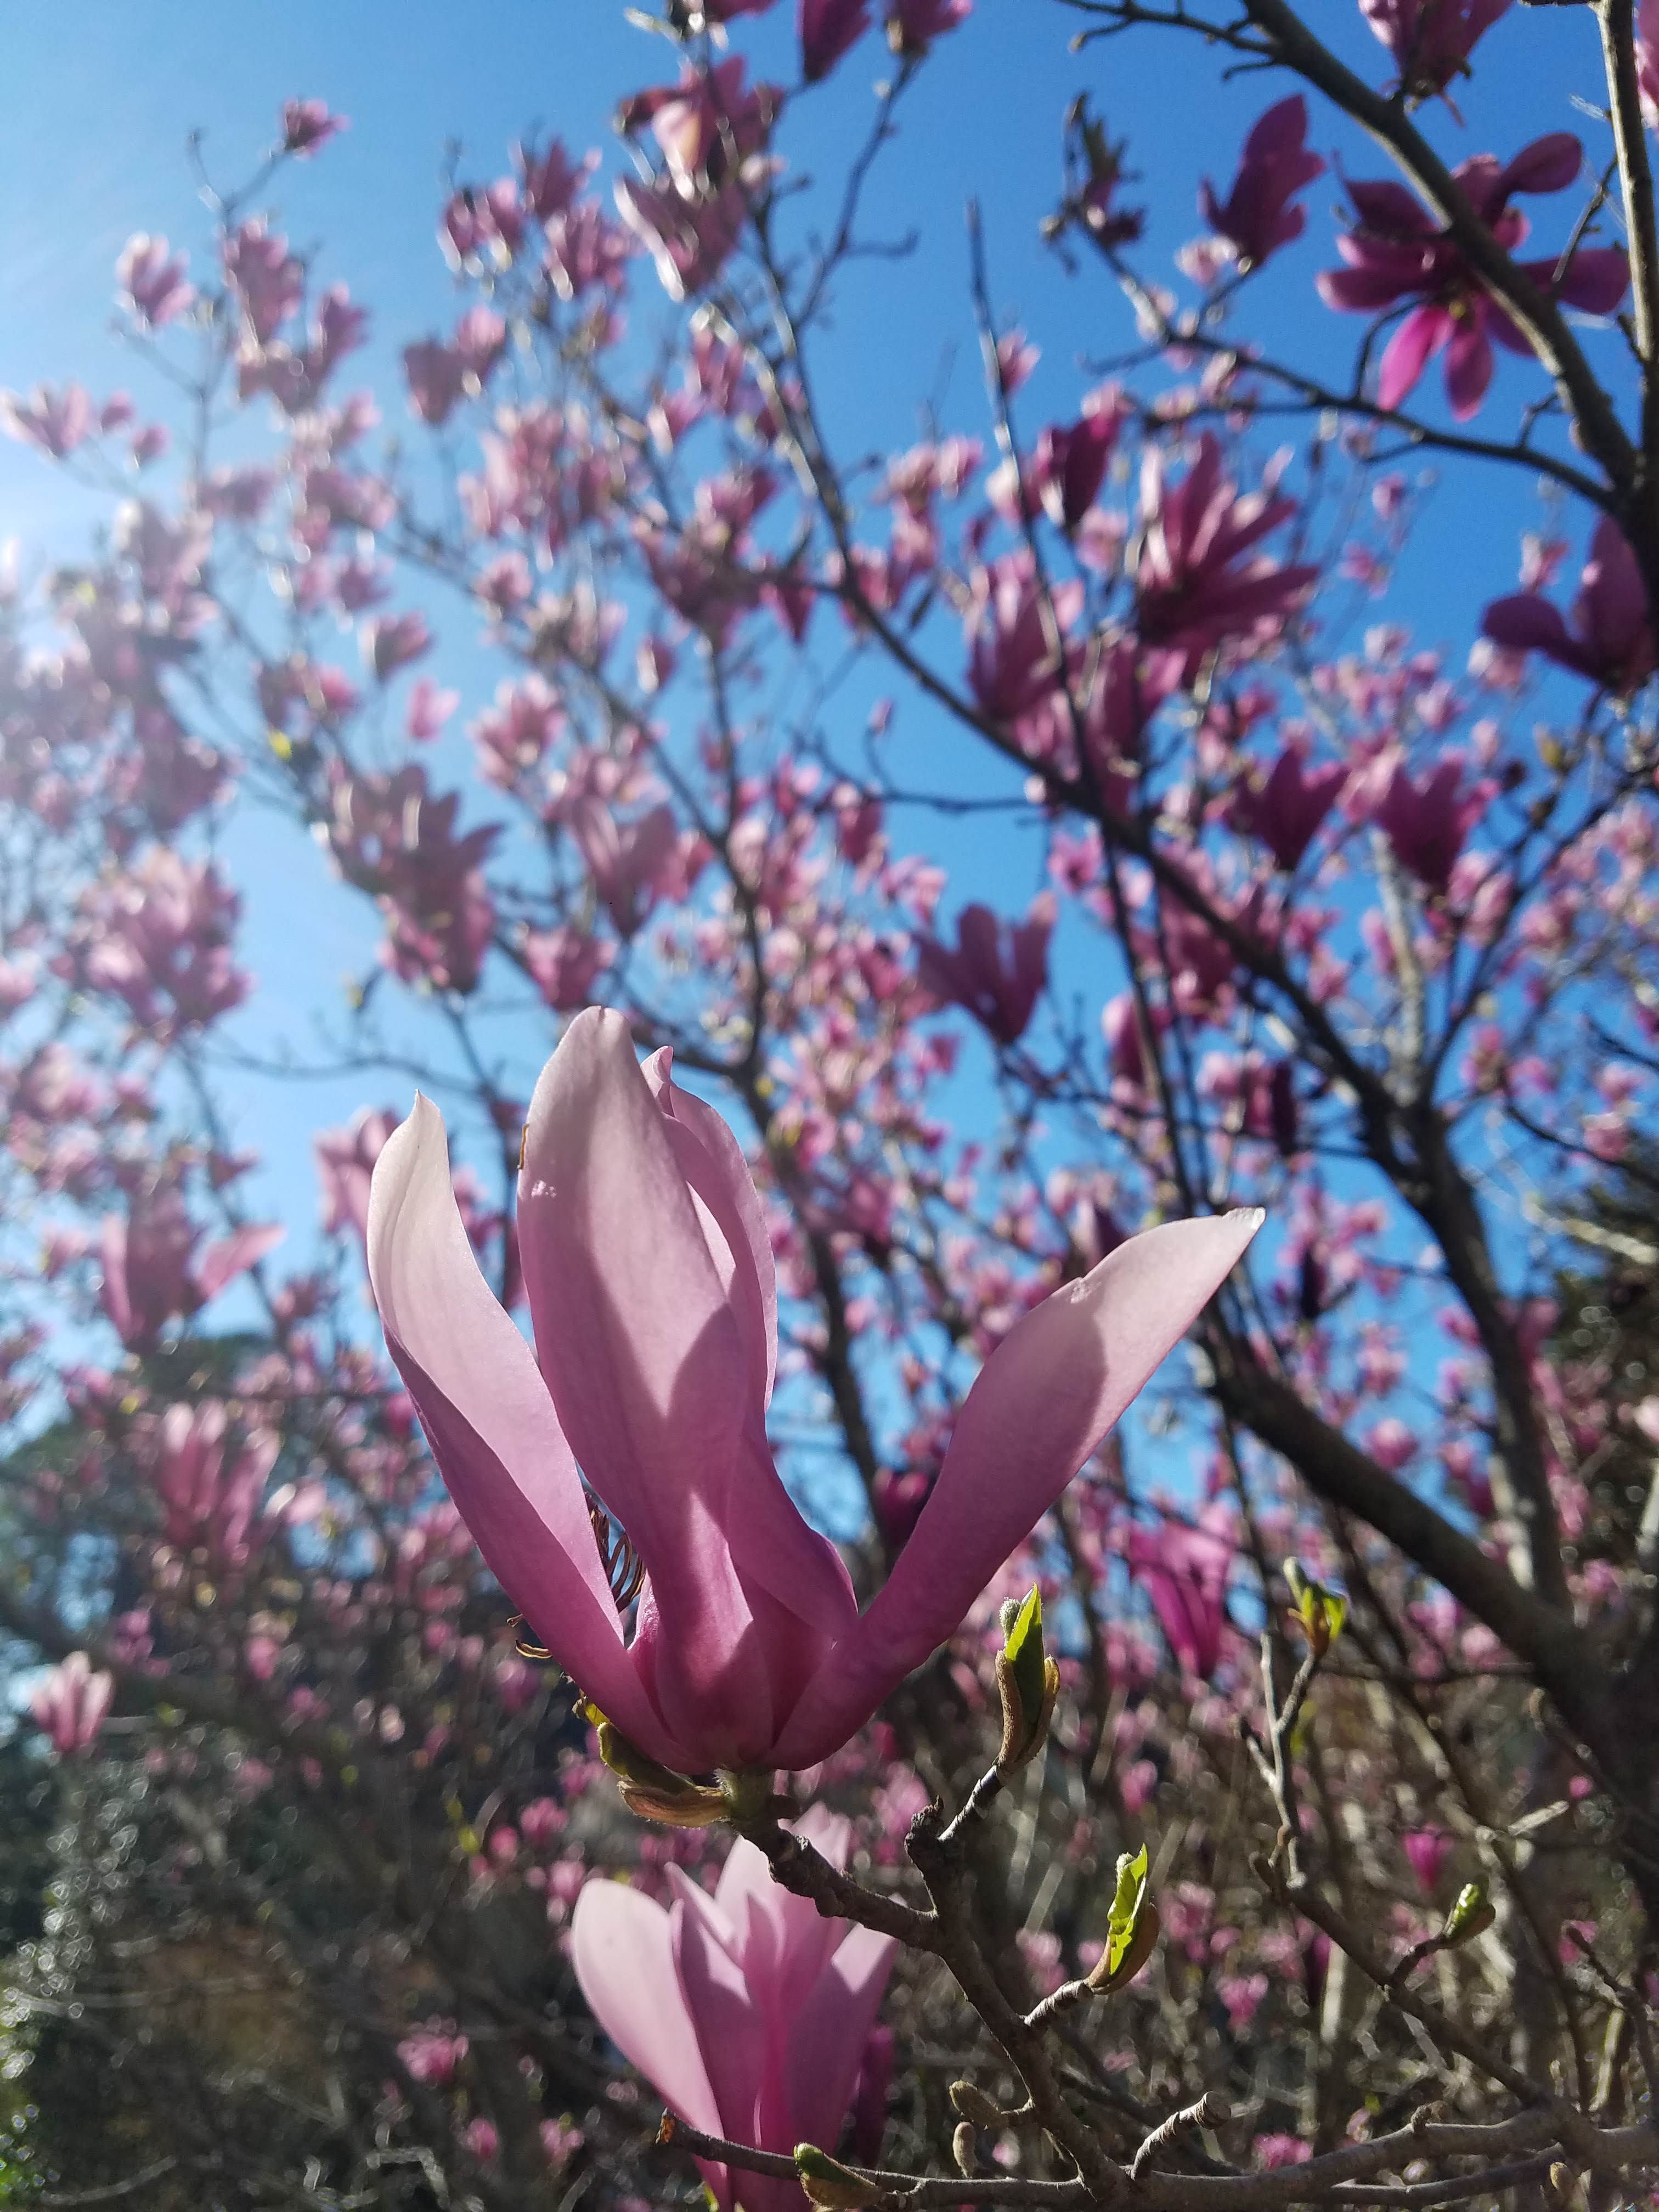 Magnolia flower show_Photo by Amanda Wilkins